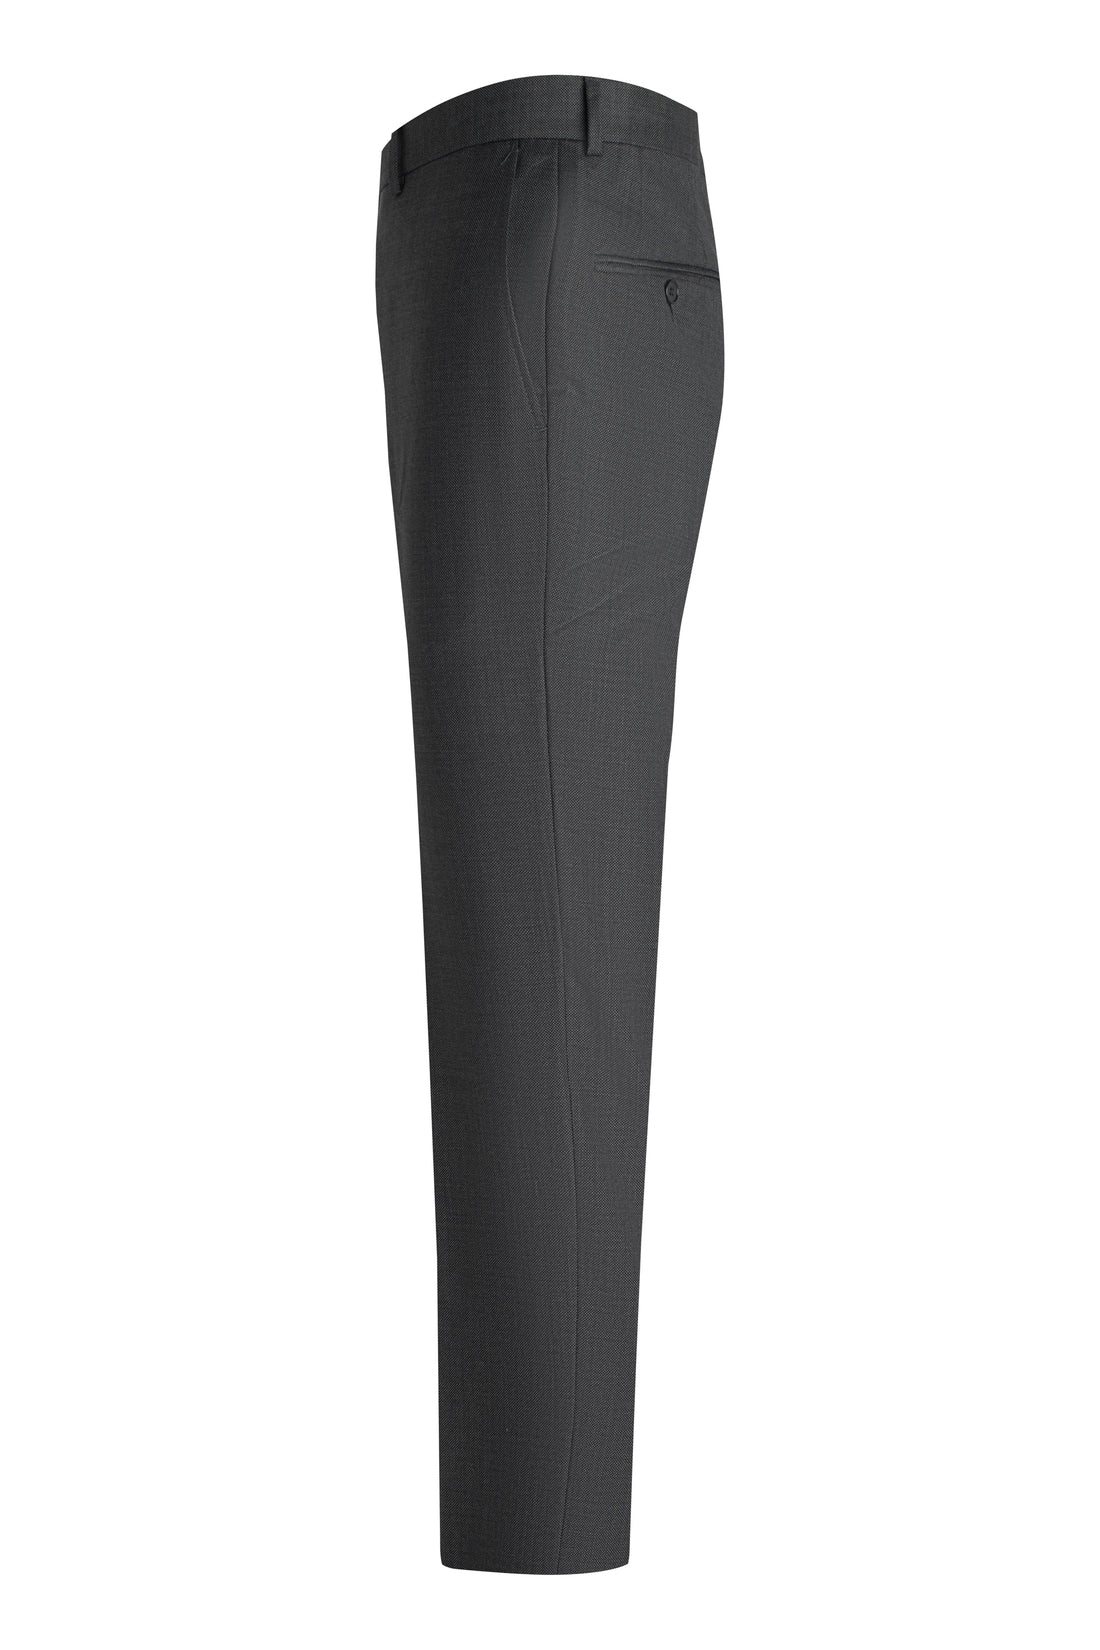 Grey Super 150s Birdseye Suit side pant